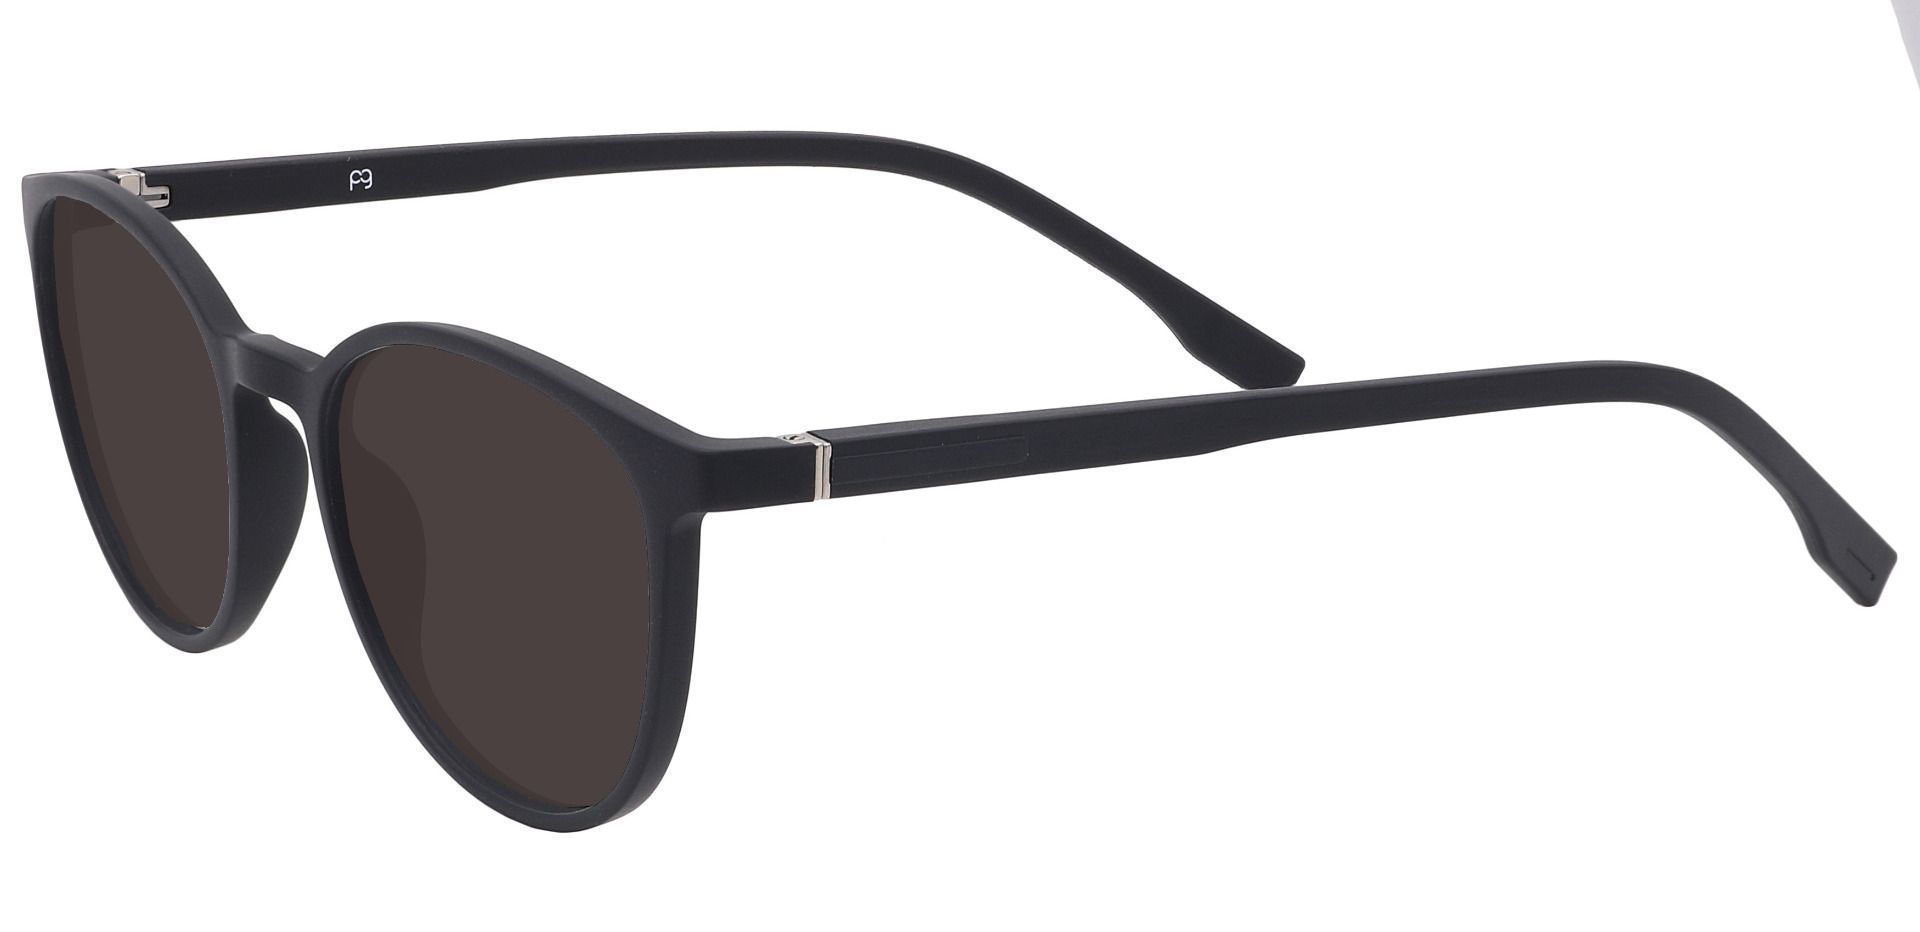 Bay Round Prescription Sunglasses - Black Frame With Gray Lenses